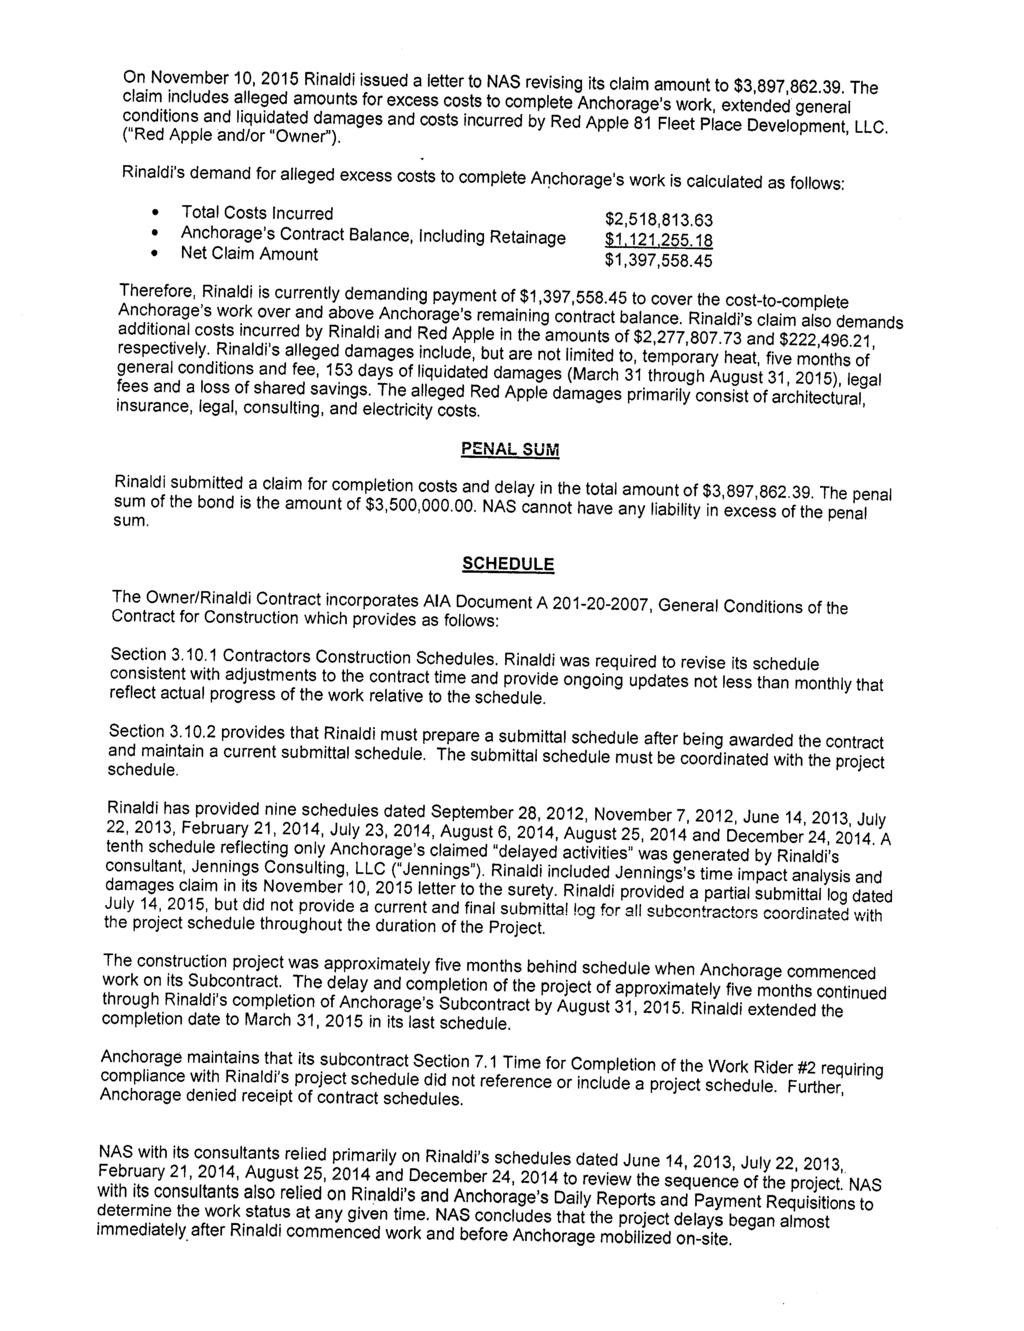 On November 10, 2015 Rinaldi issued aletterto NAS revising its claim amount to $3,897,862.39.